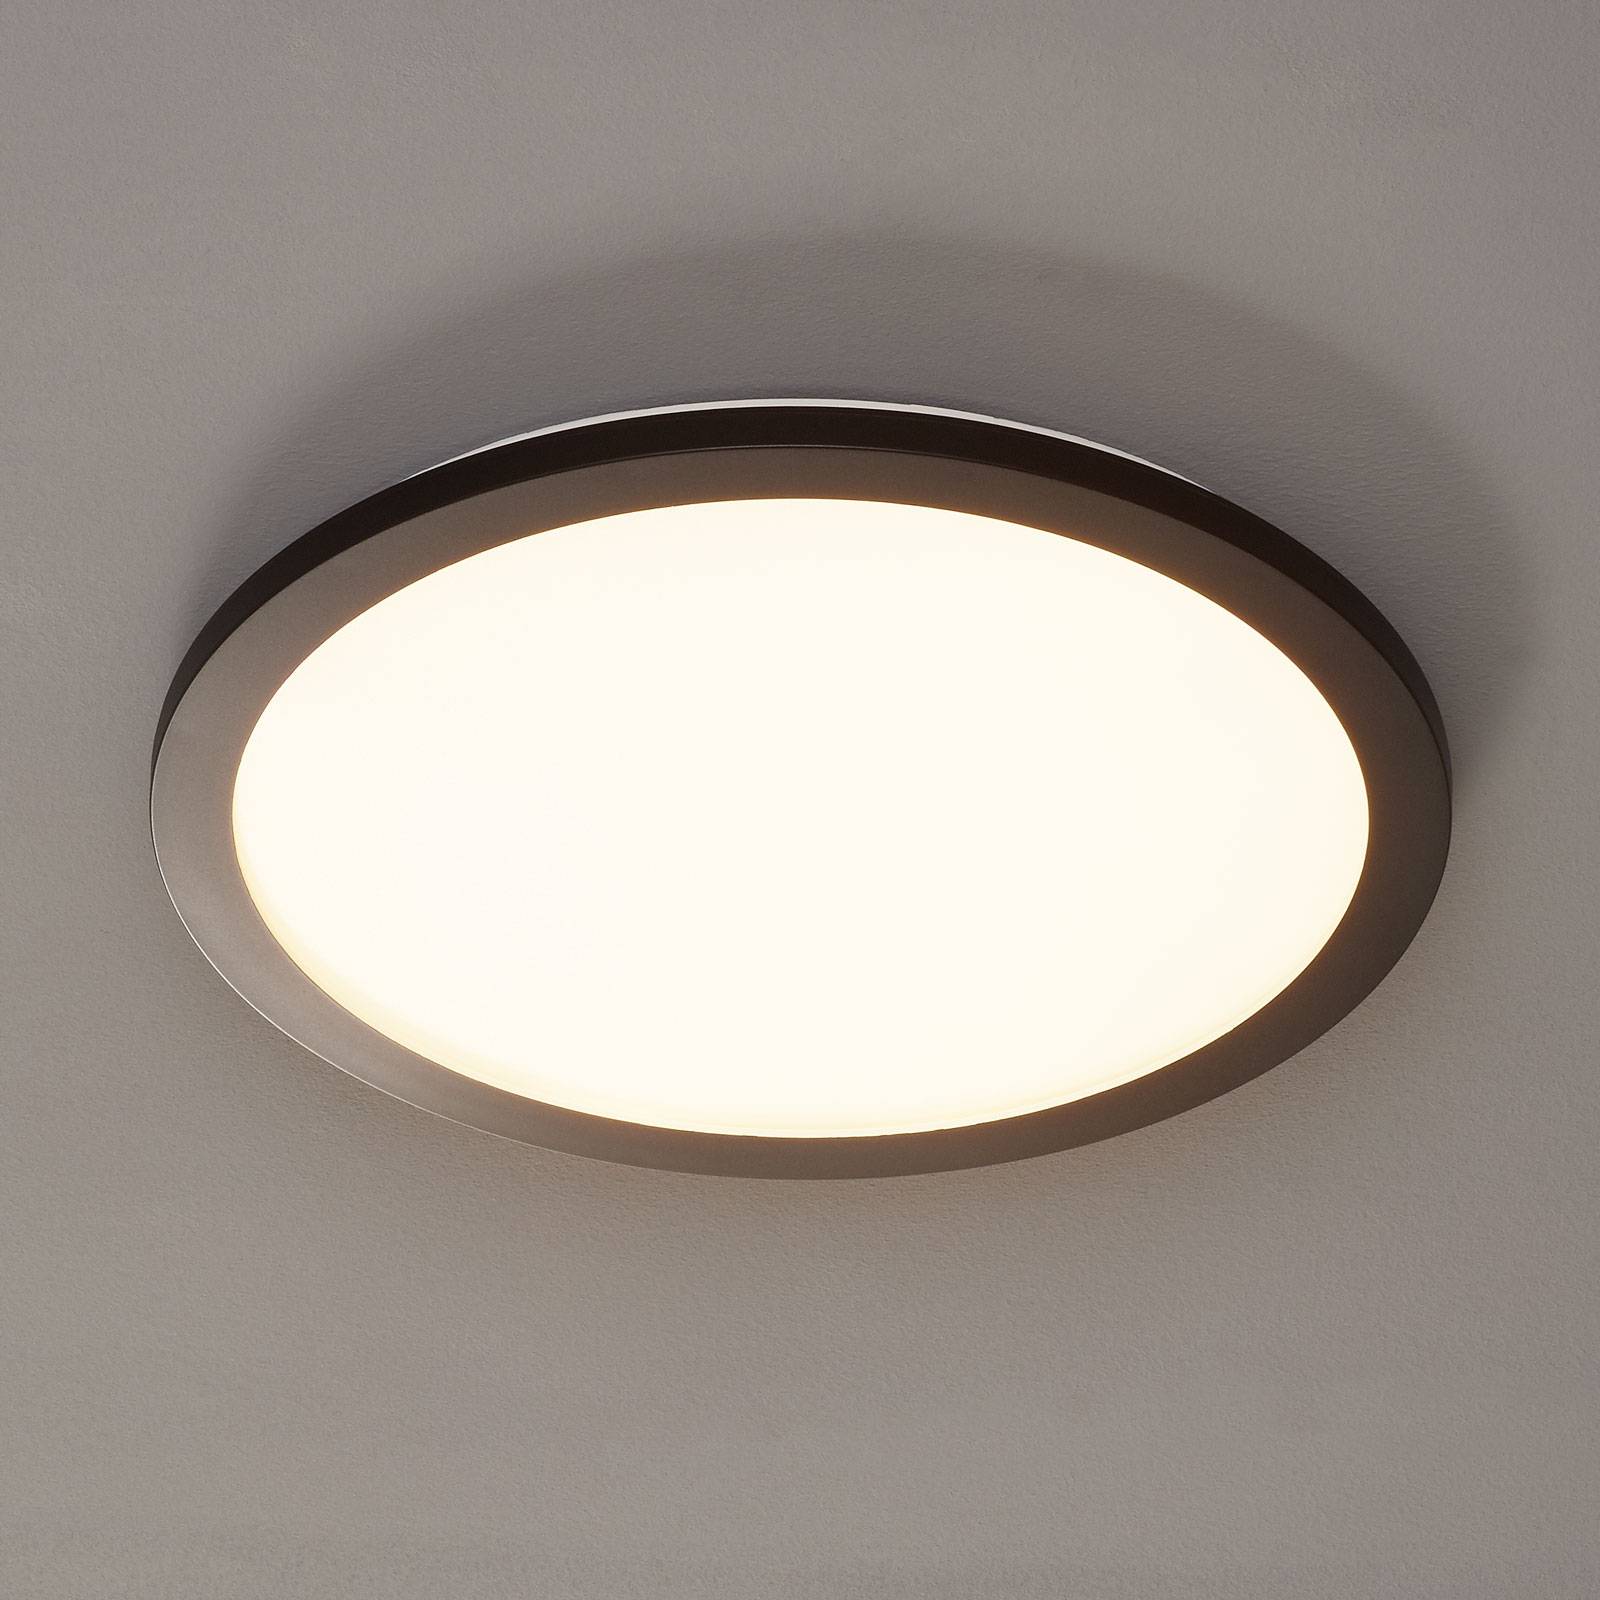 Lampa sufitowa LED Camillus, okrągła, Ø 40 cm